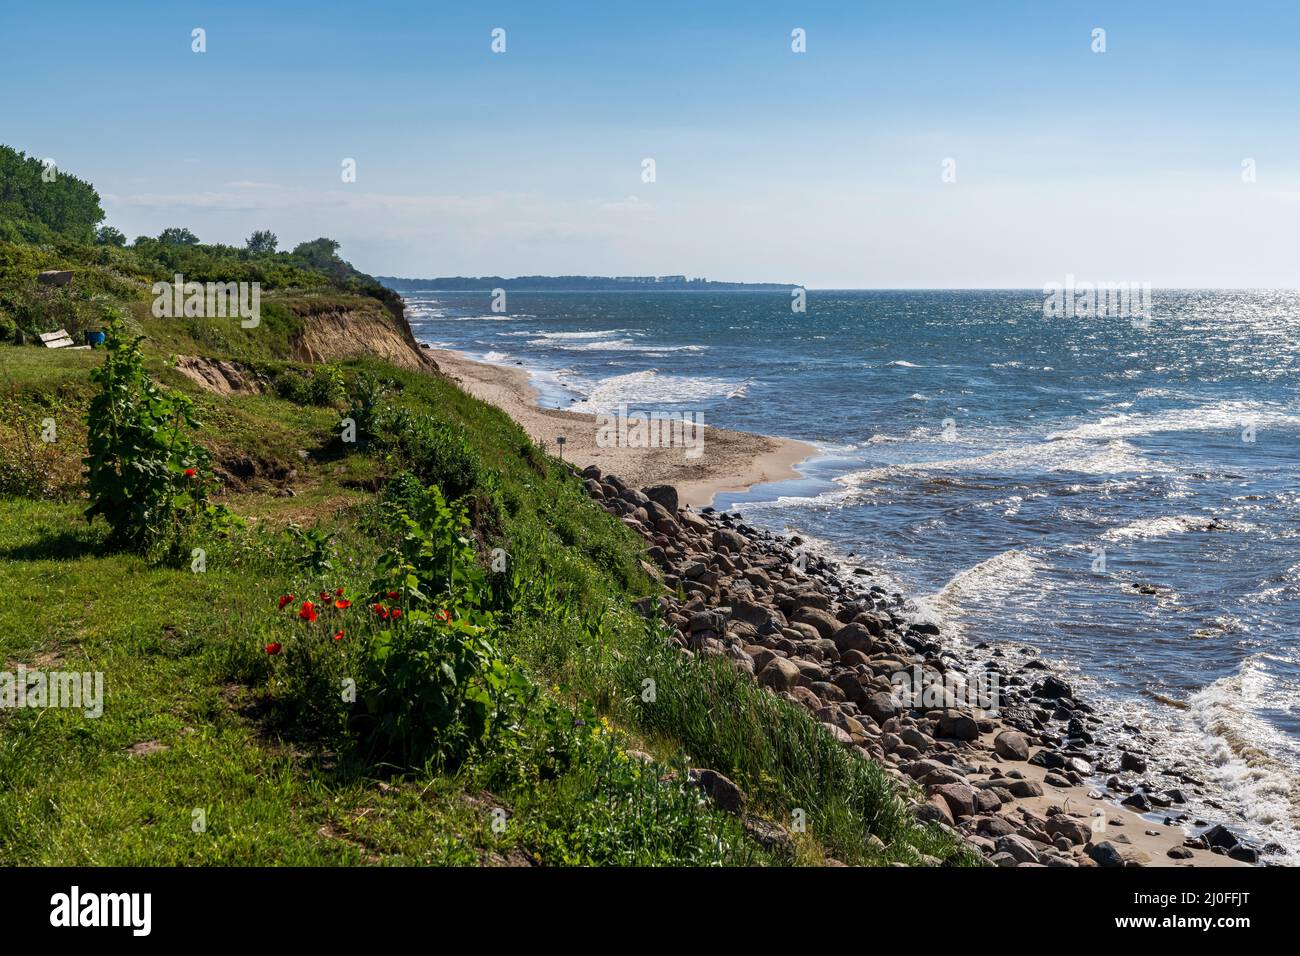 The baltic sea coast and the beach in Meschendorf, Mecklenburg-Western Pomerania, Germany Stock Photo